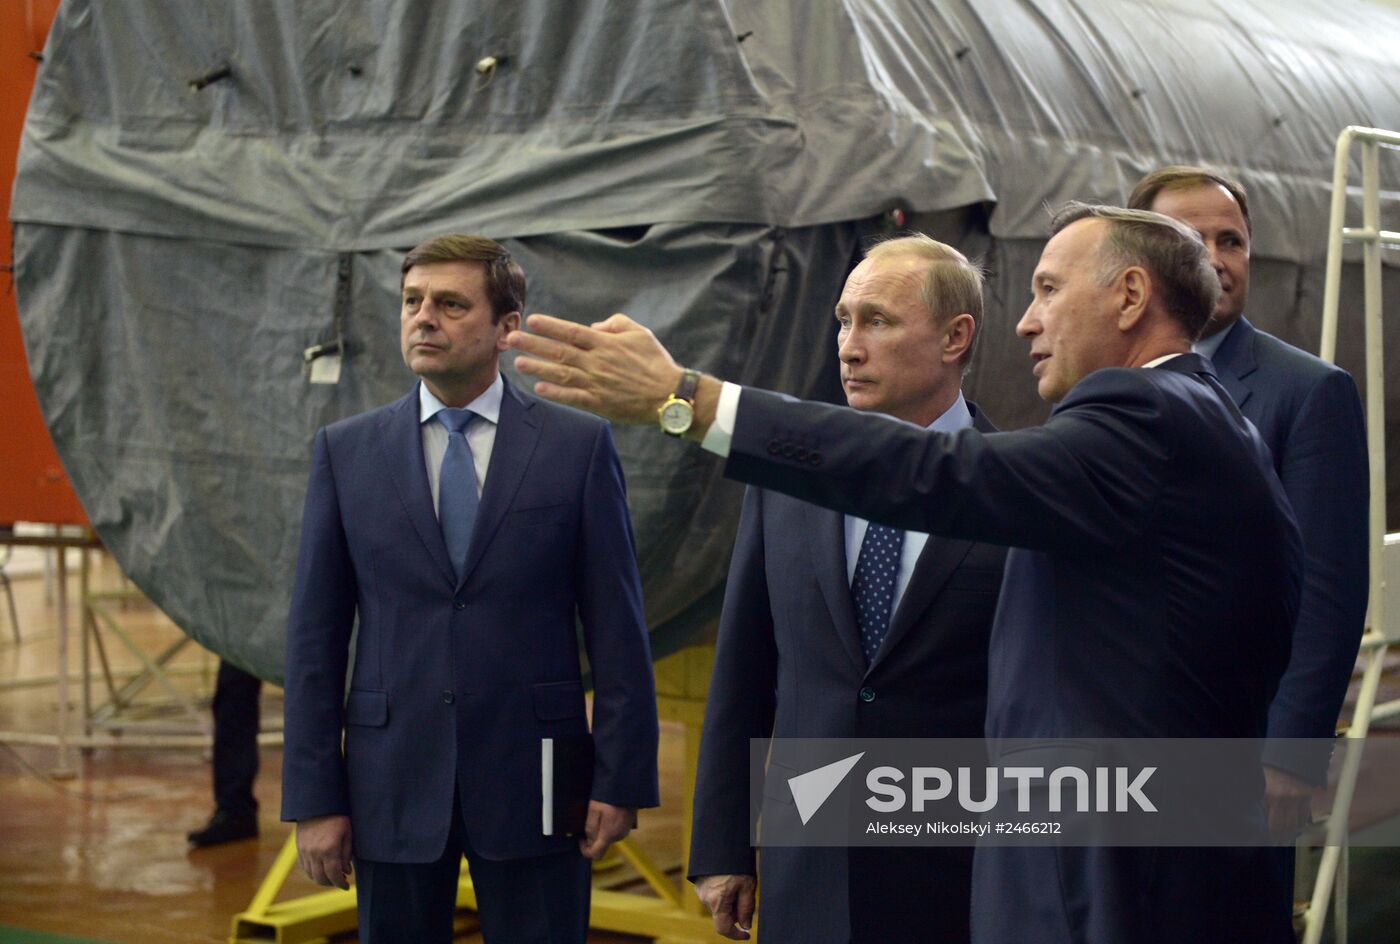 V.Putin's working visit to Samara Region